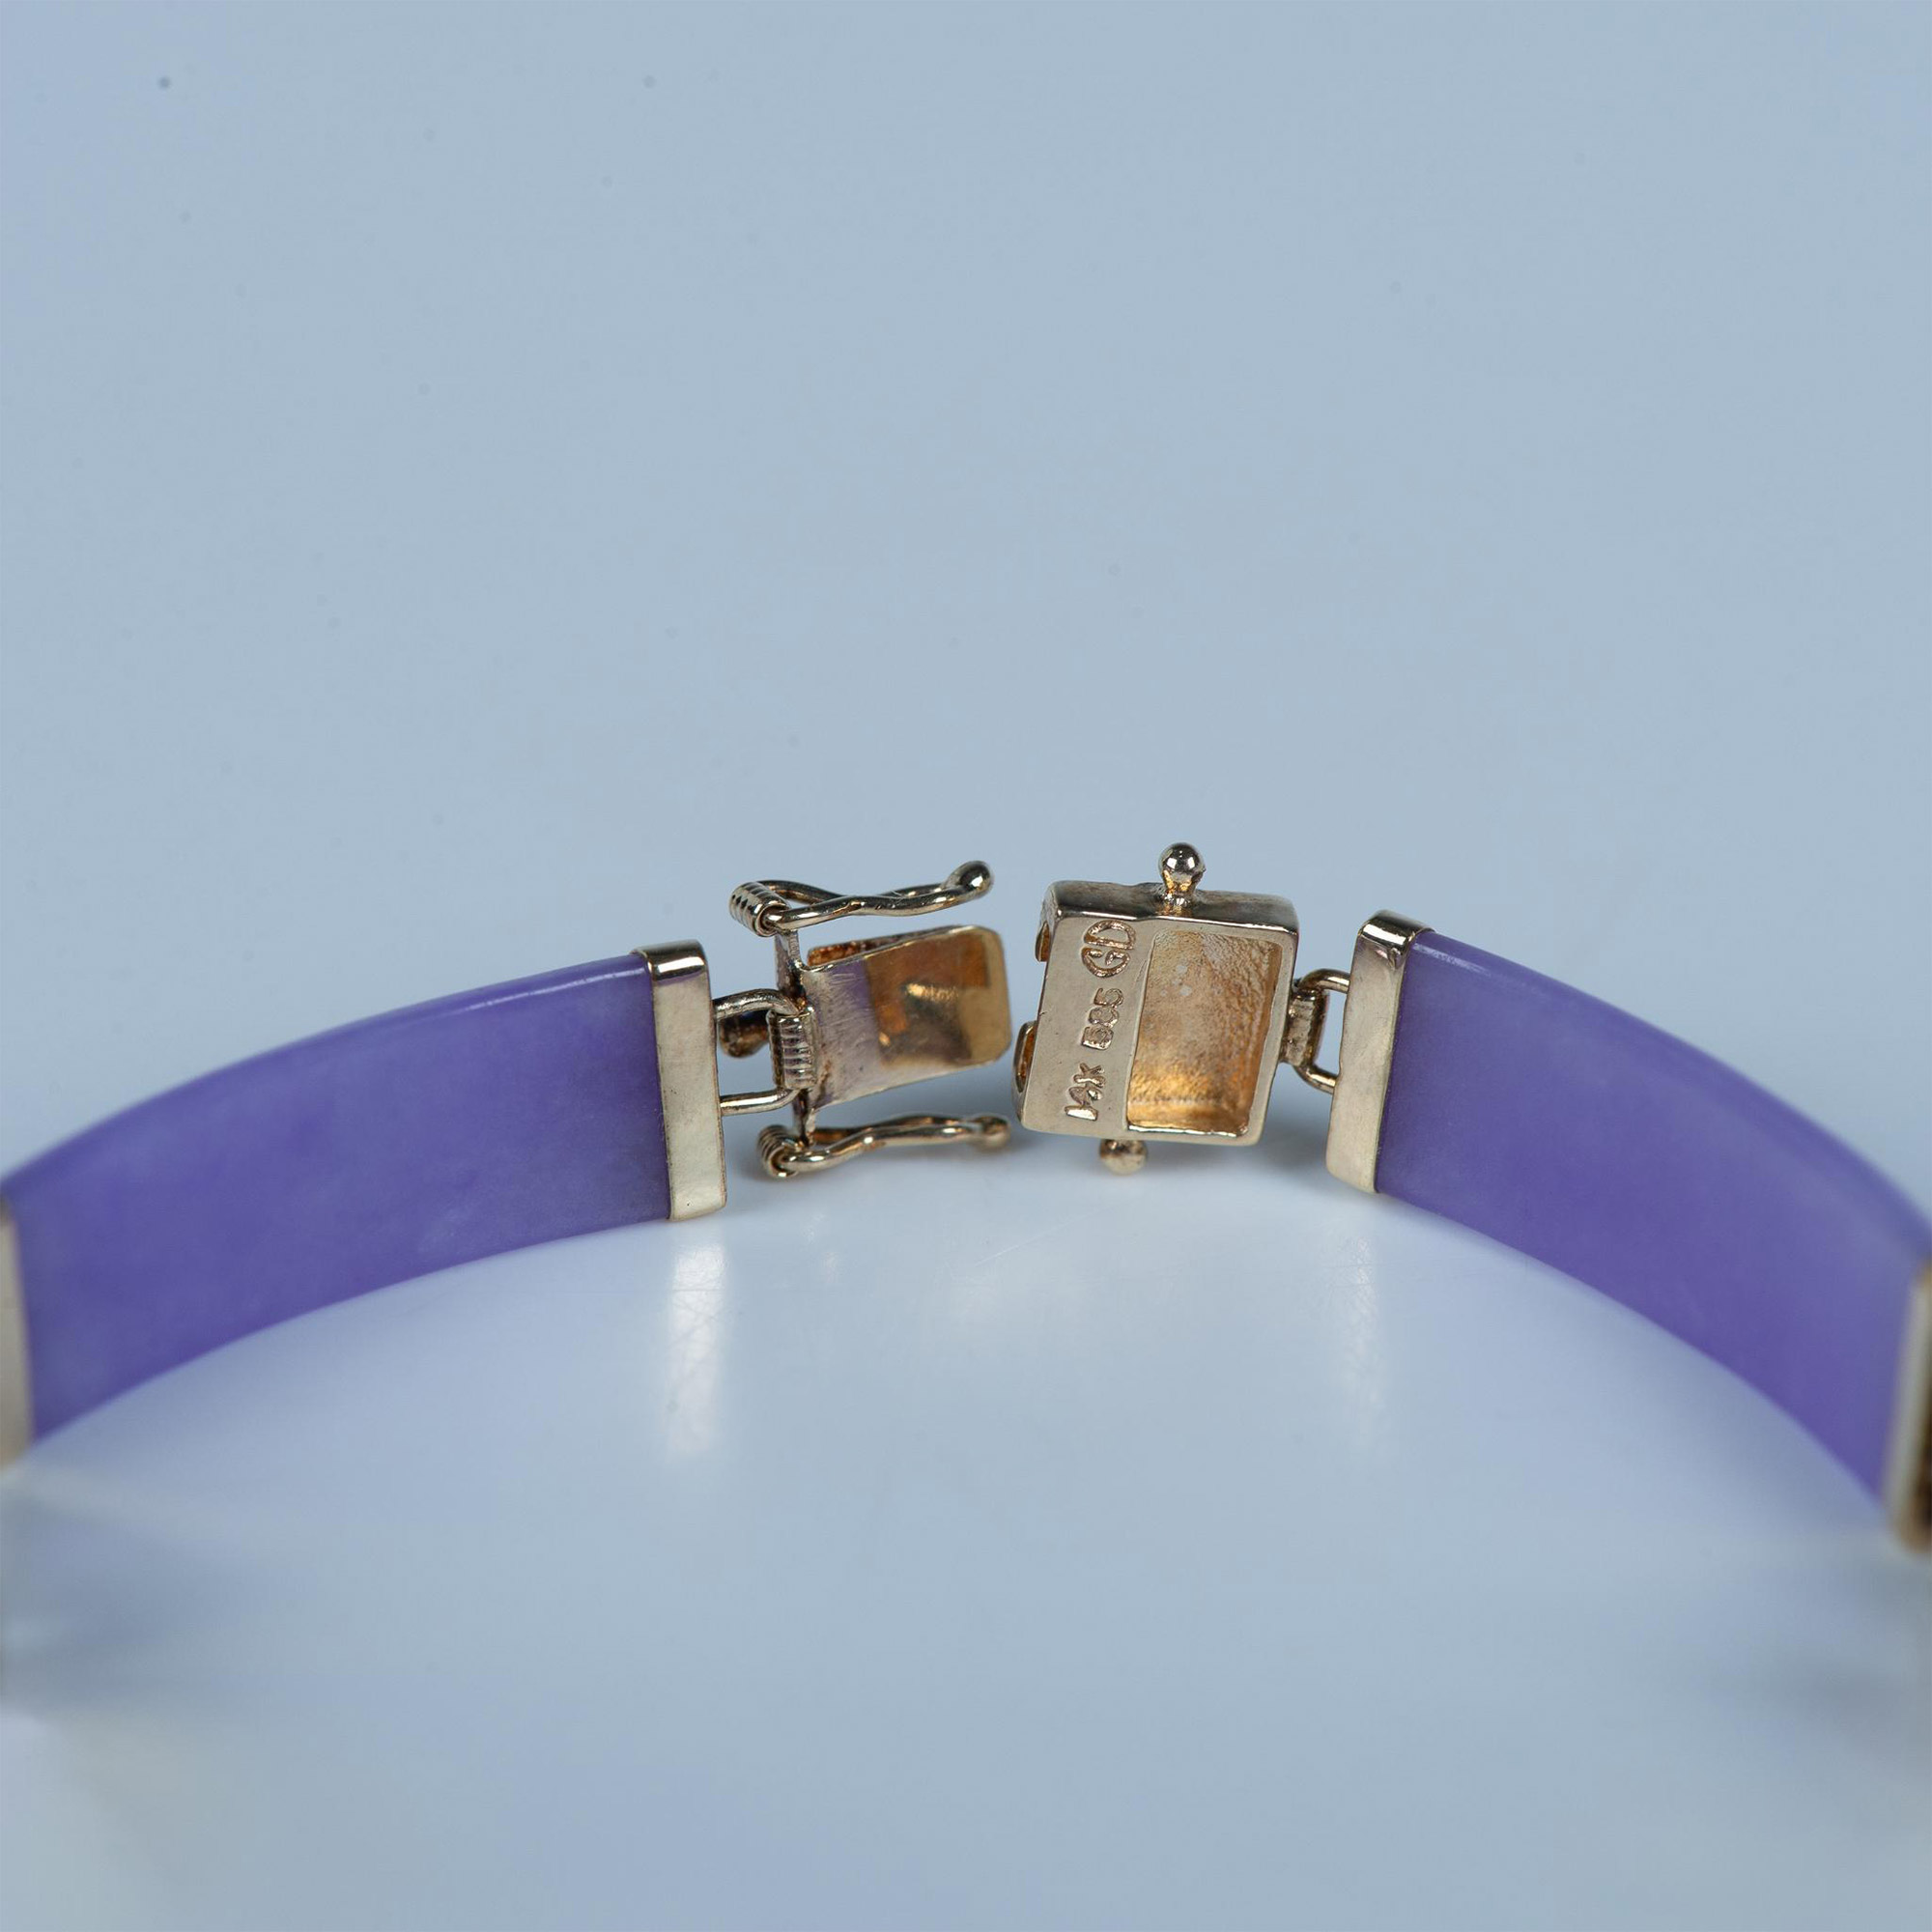 Stunning 14K Gold, Purple Jade, and Amethyst Bracelet - Image 3 of 7